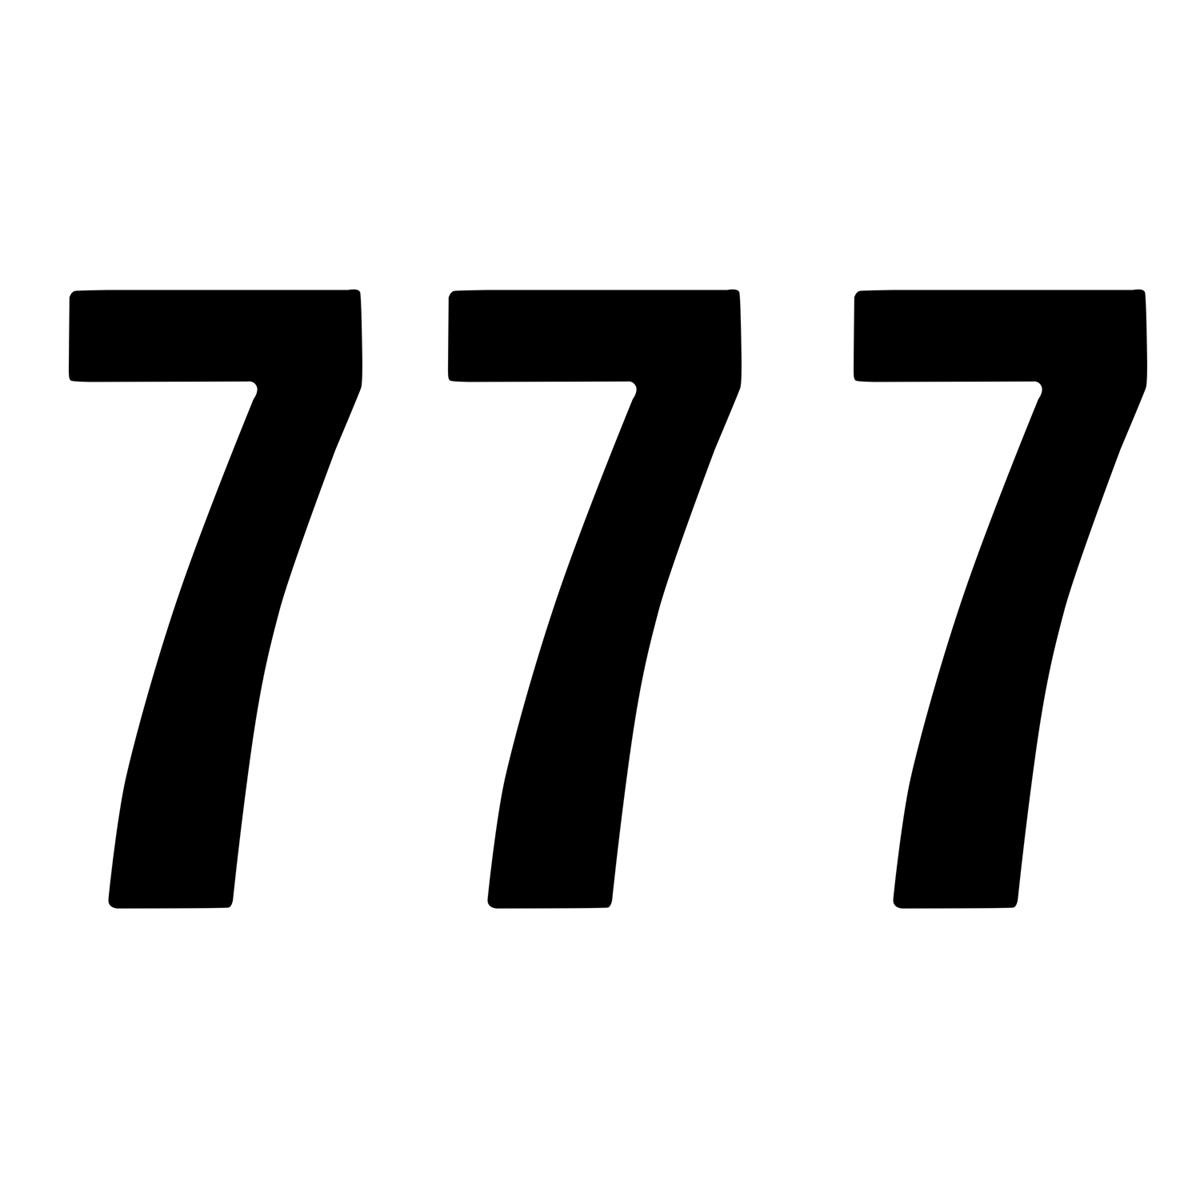 ZAP Startnummer-Set Standard Nummer 7, Schwarz, 15 cm, 3 Stück